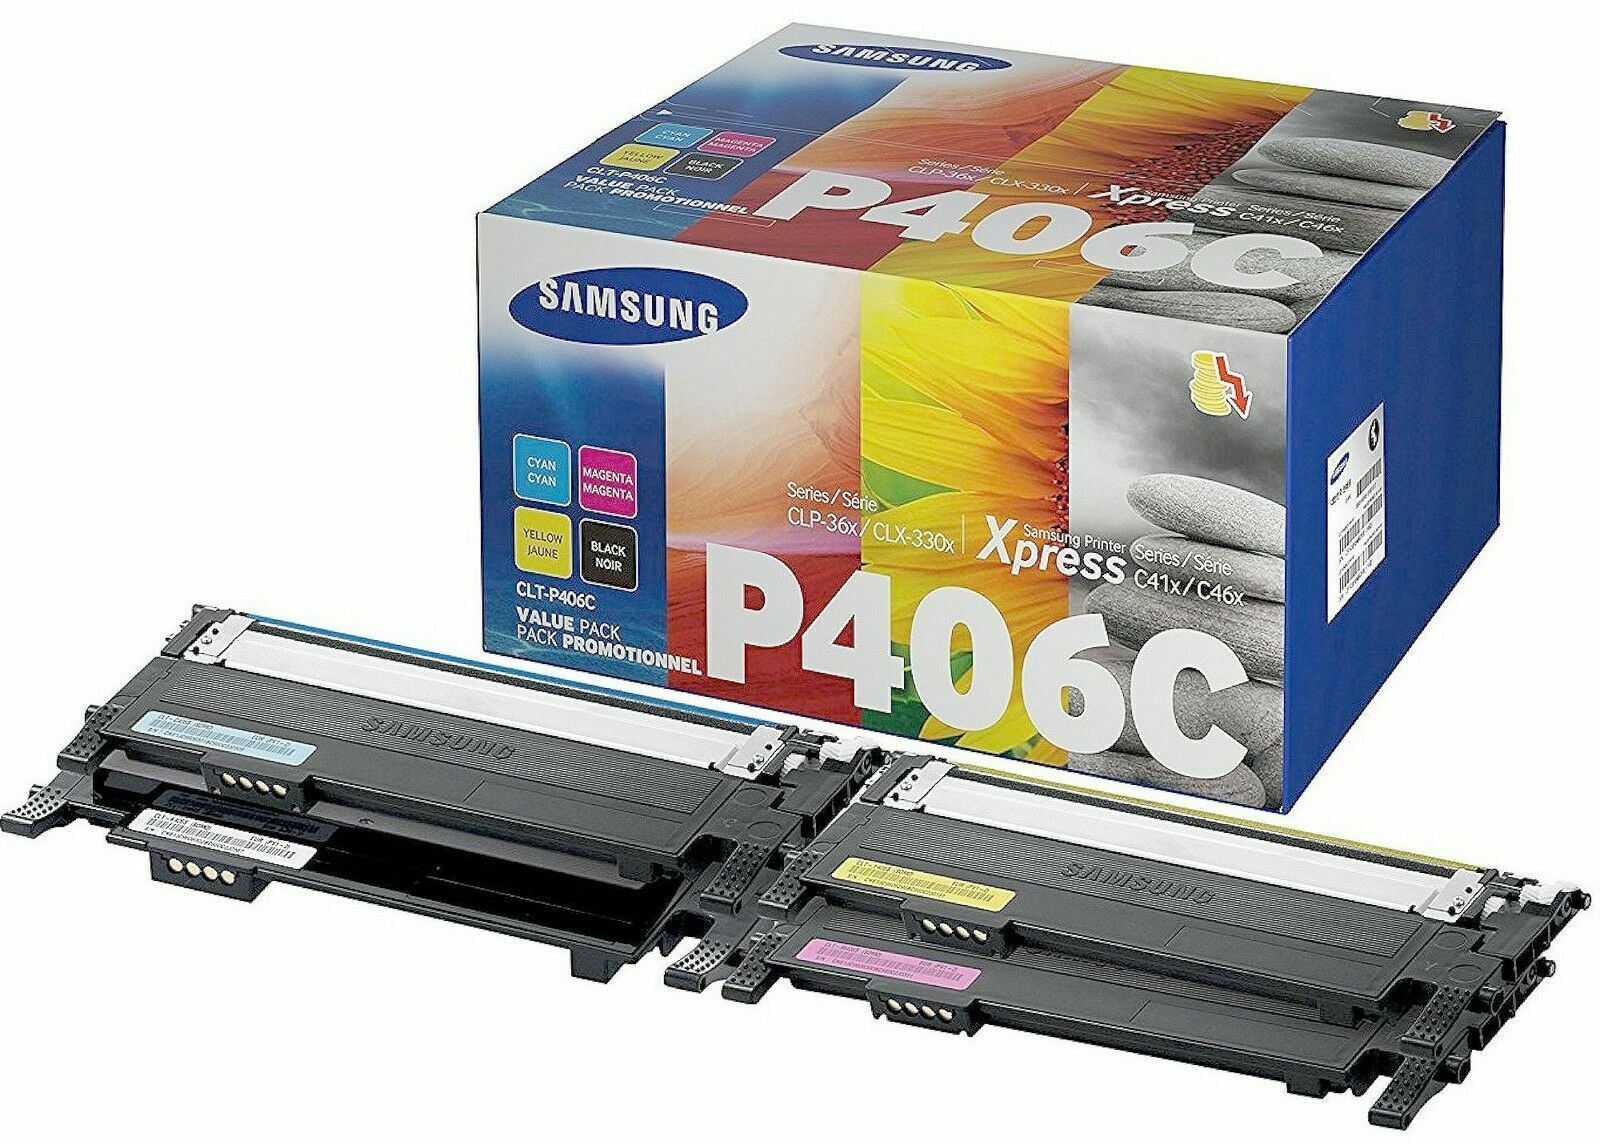 NEW Samsung CLT-P406C Toner Cartridge VALUE PACK Cyan Magenta Yellow Black Print